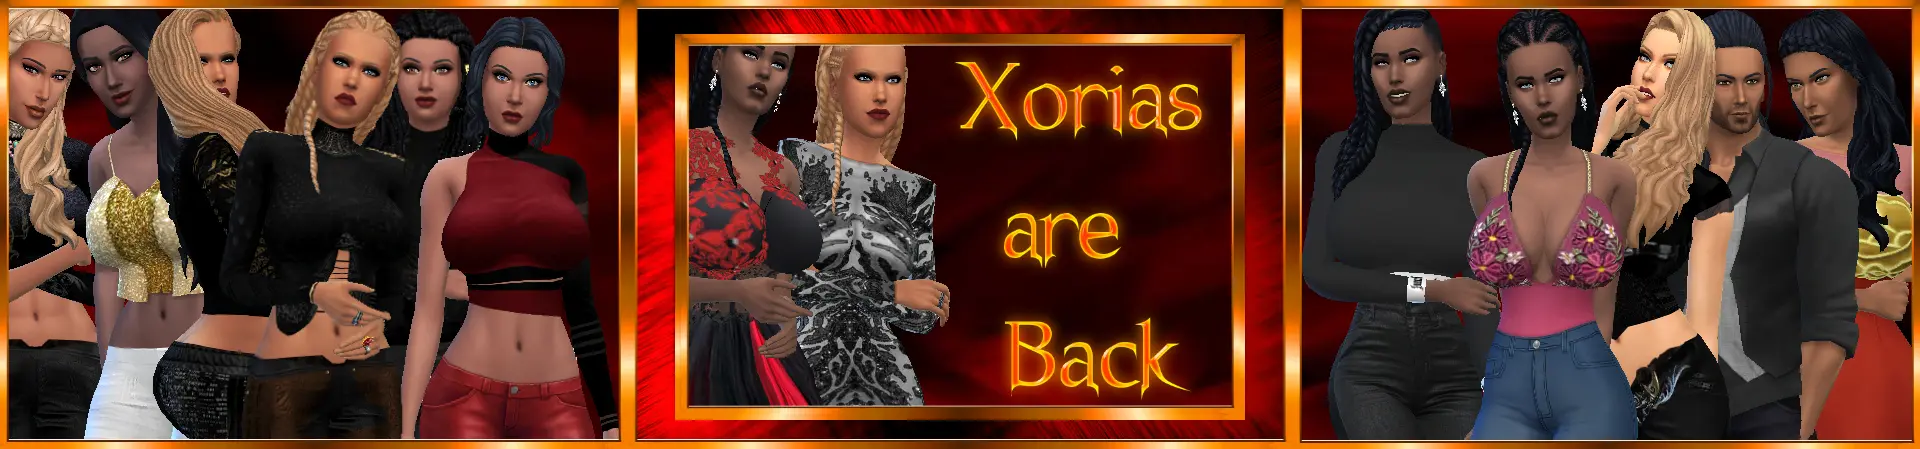 Xorias are Back [v0.1.0.1] main image